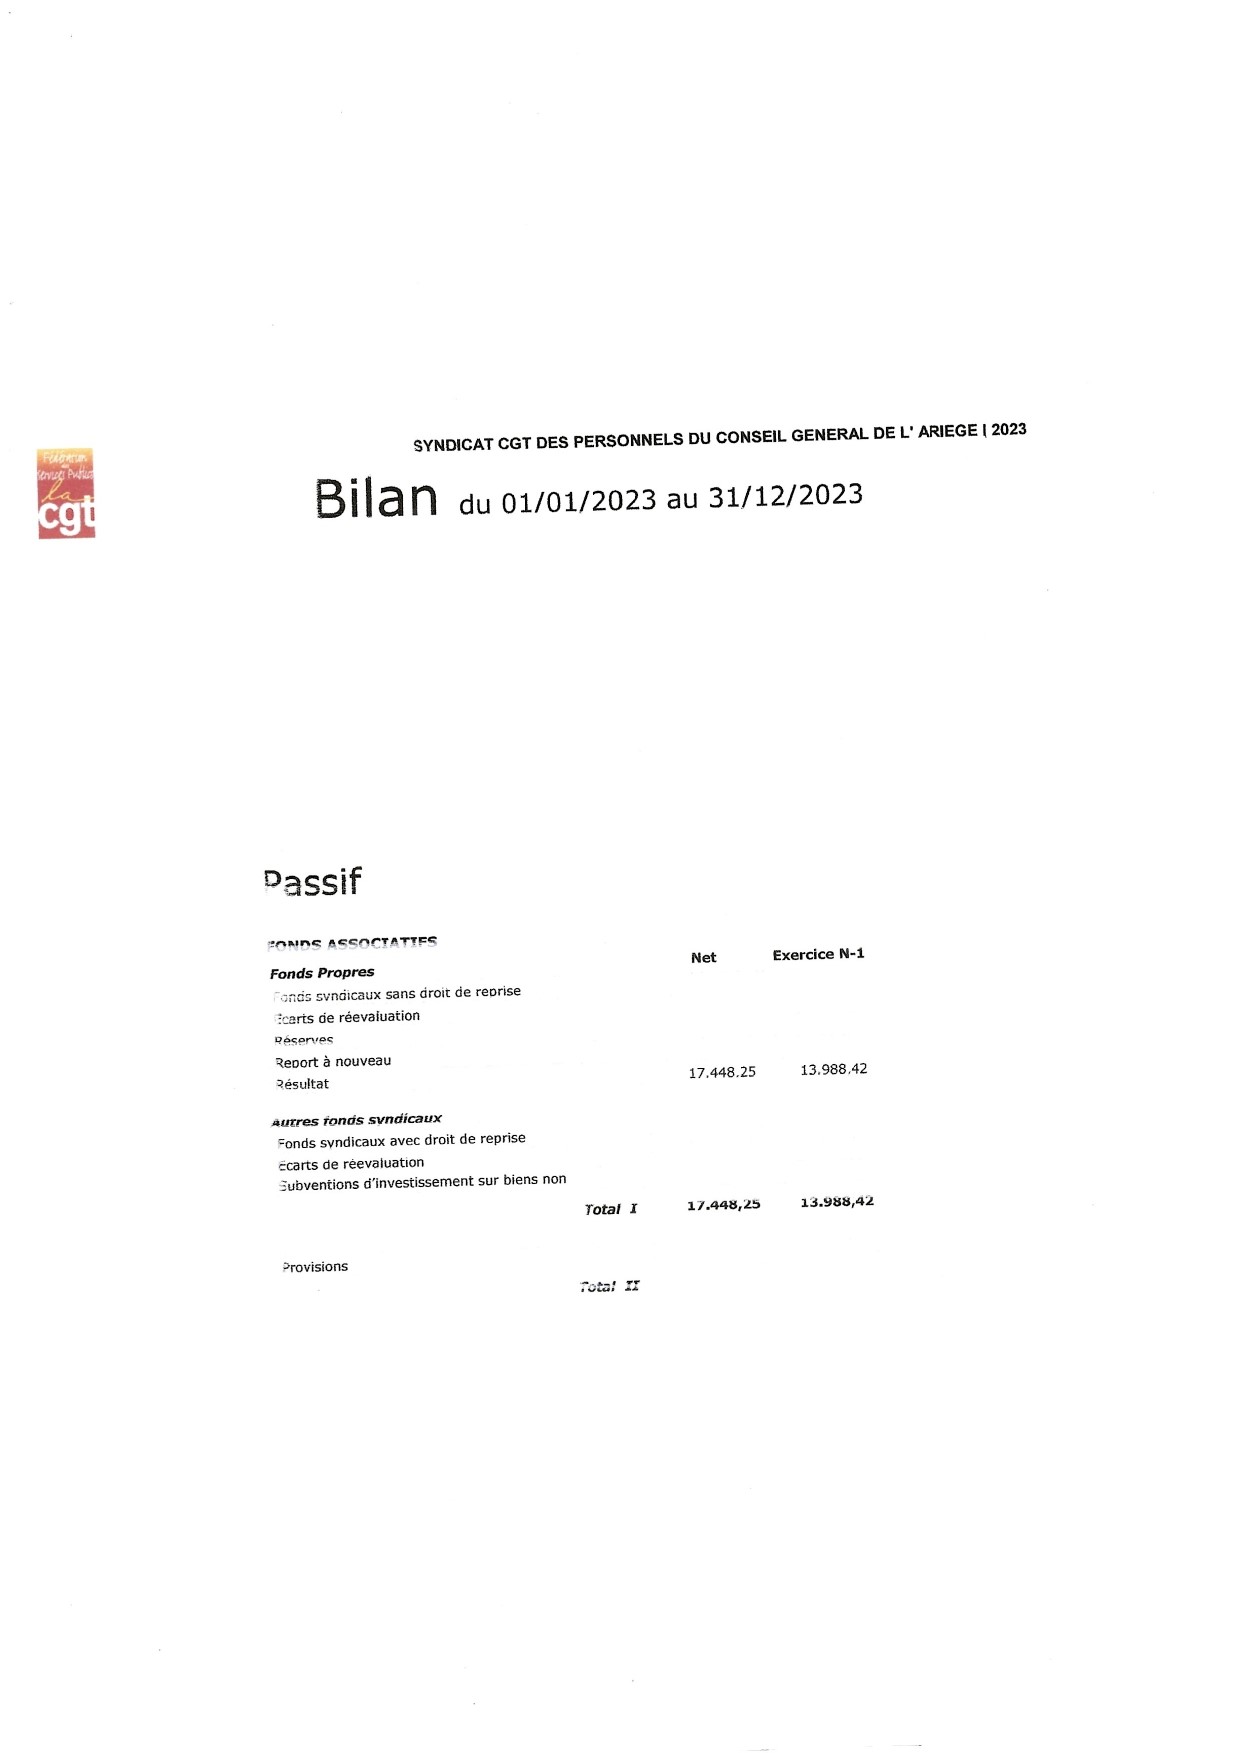 BILAN PASSIF 2023 SYNDICAT CGT CONSEIL DEPARTEMENTAL 09